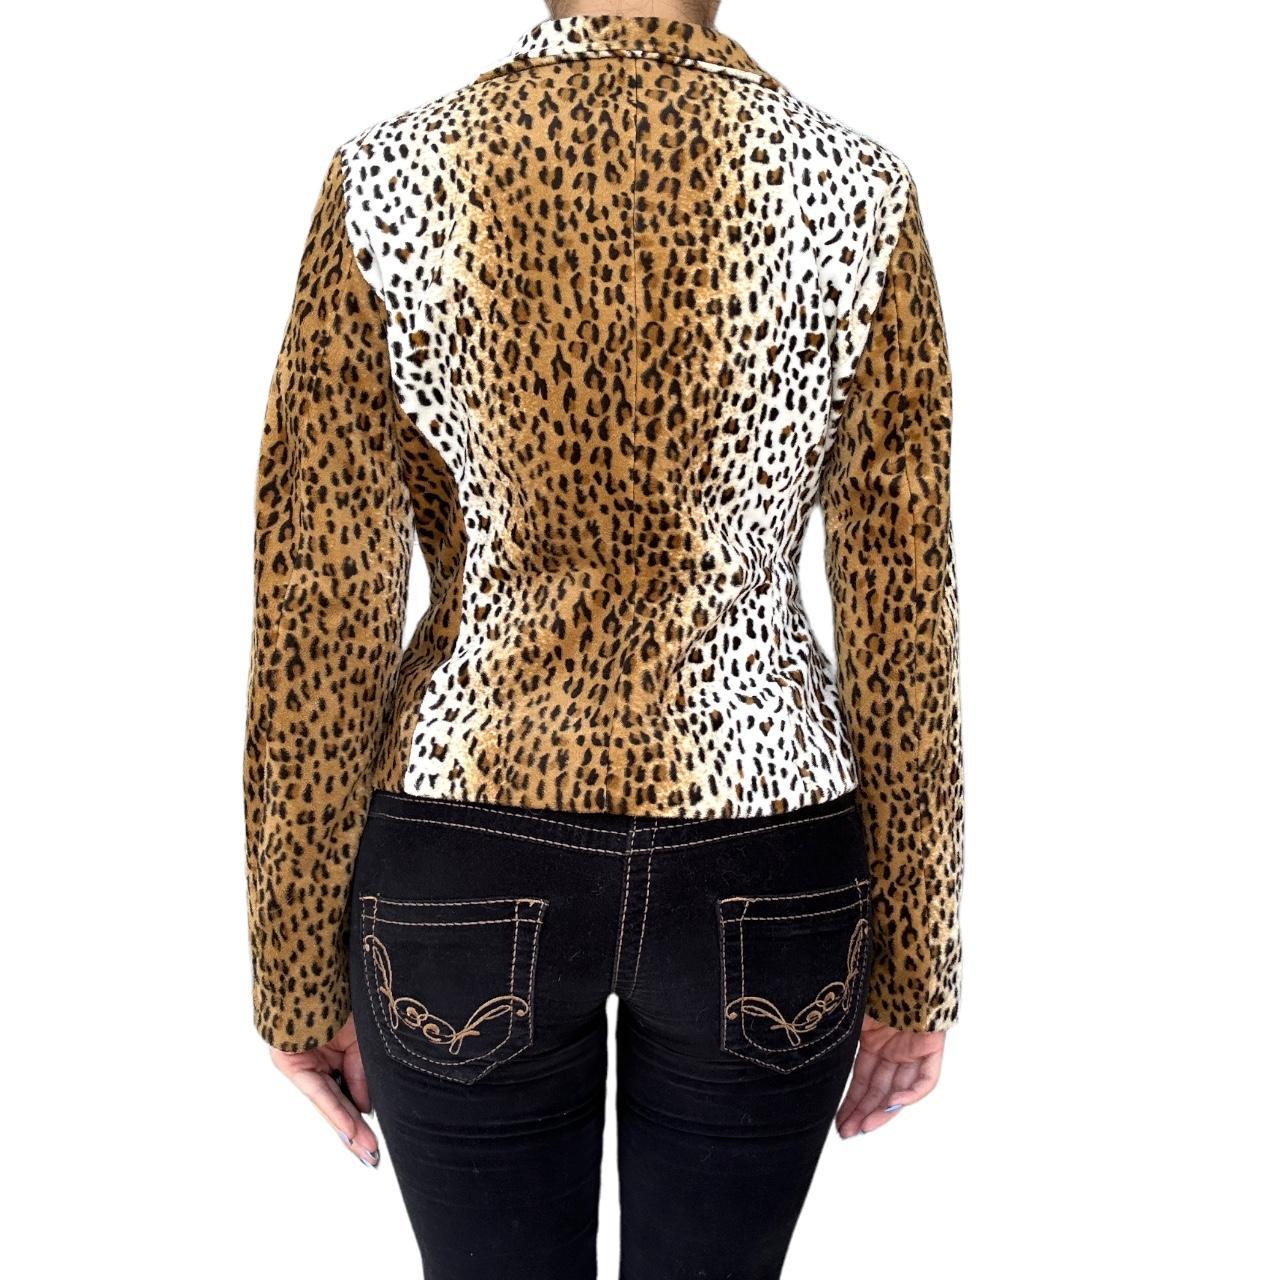 Vintage cheetah blazer jacket 90s Fran Fine cheetah... - Depop